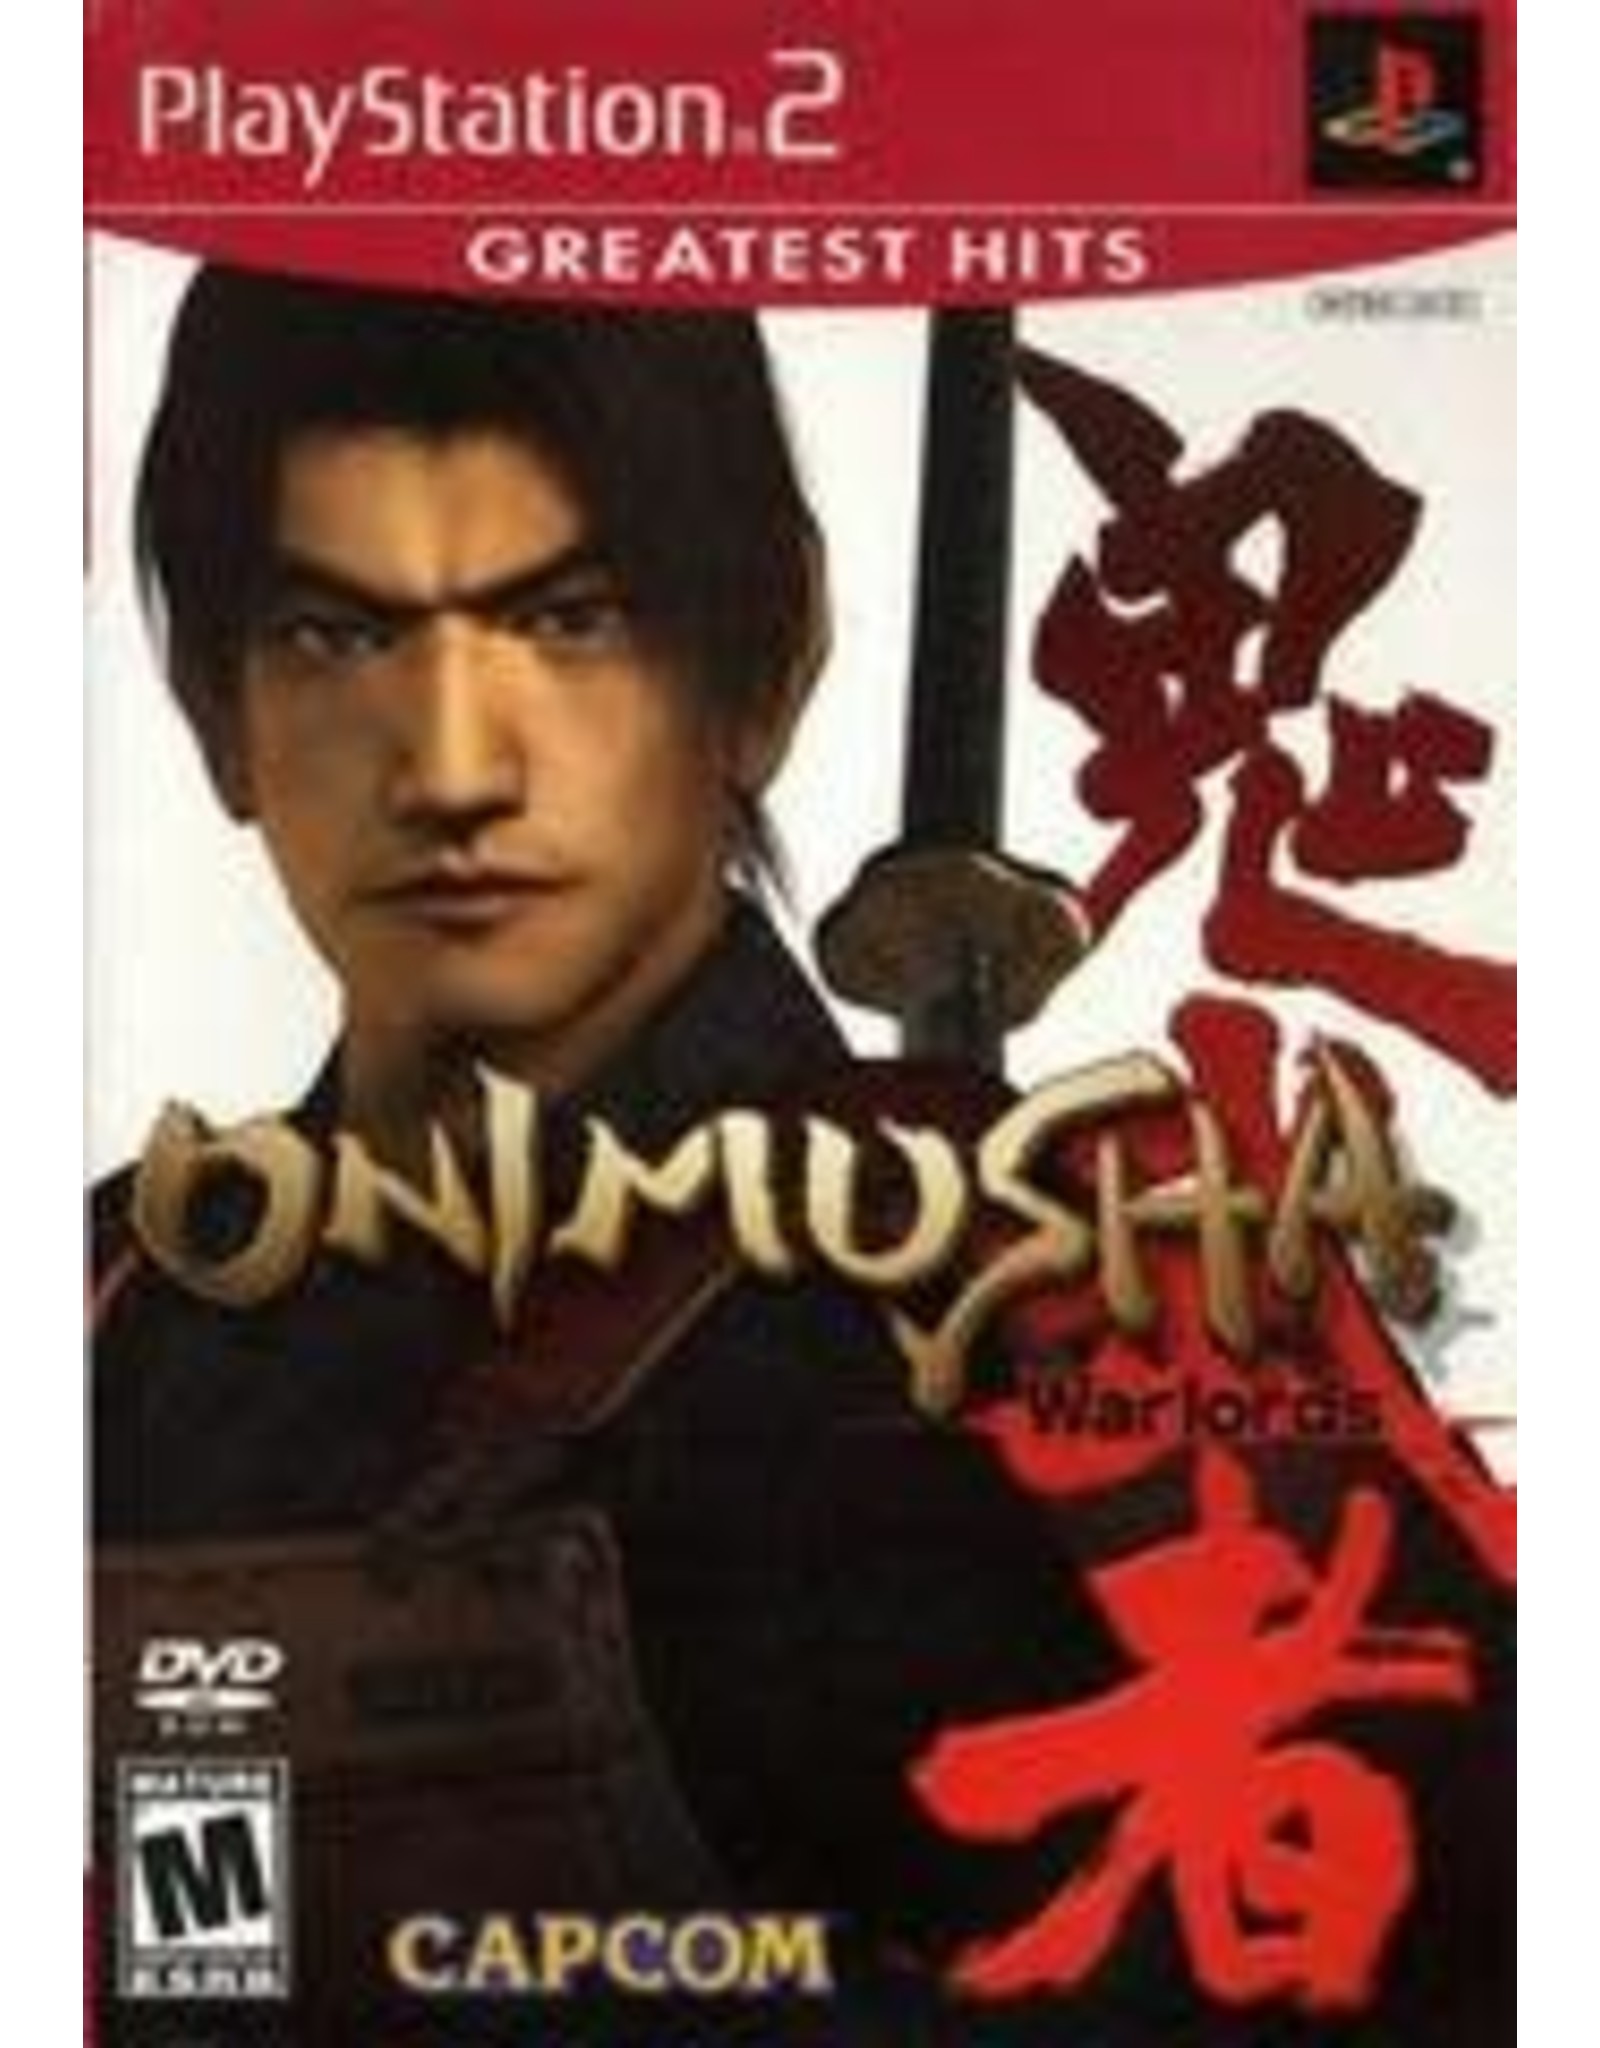 Playstation 2 Onimusha Warlords (Greatest Hits, CiB)